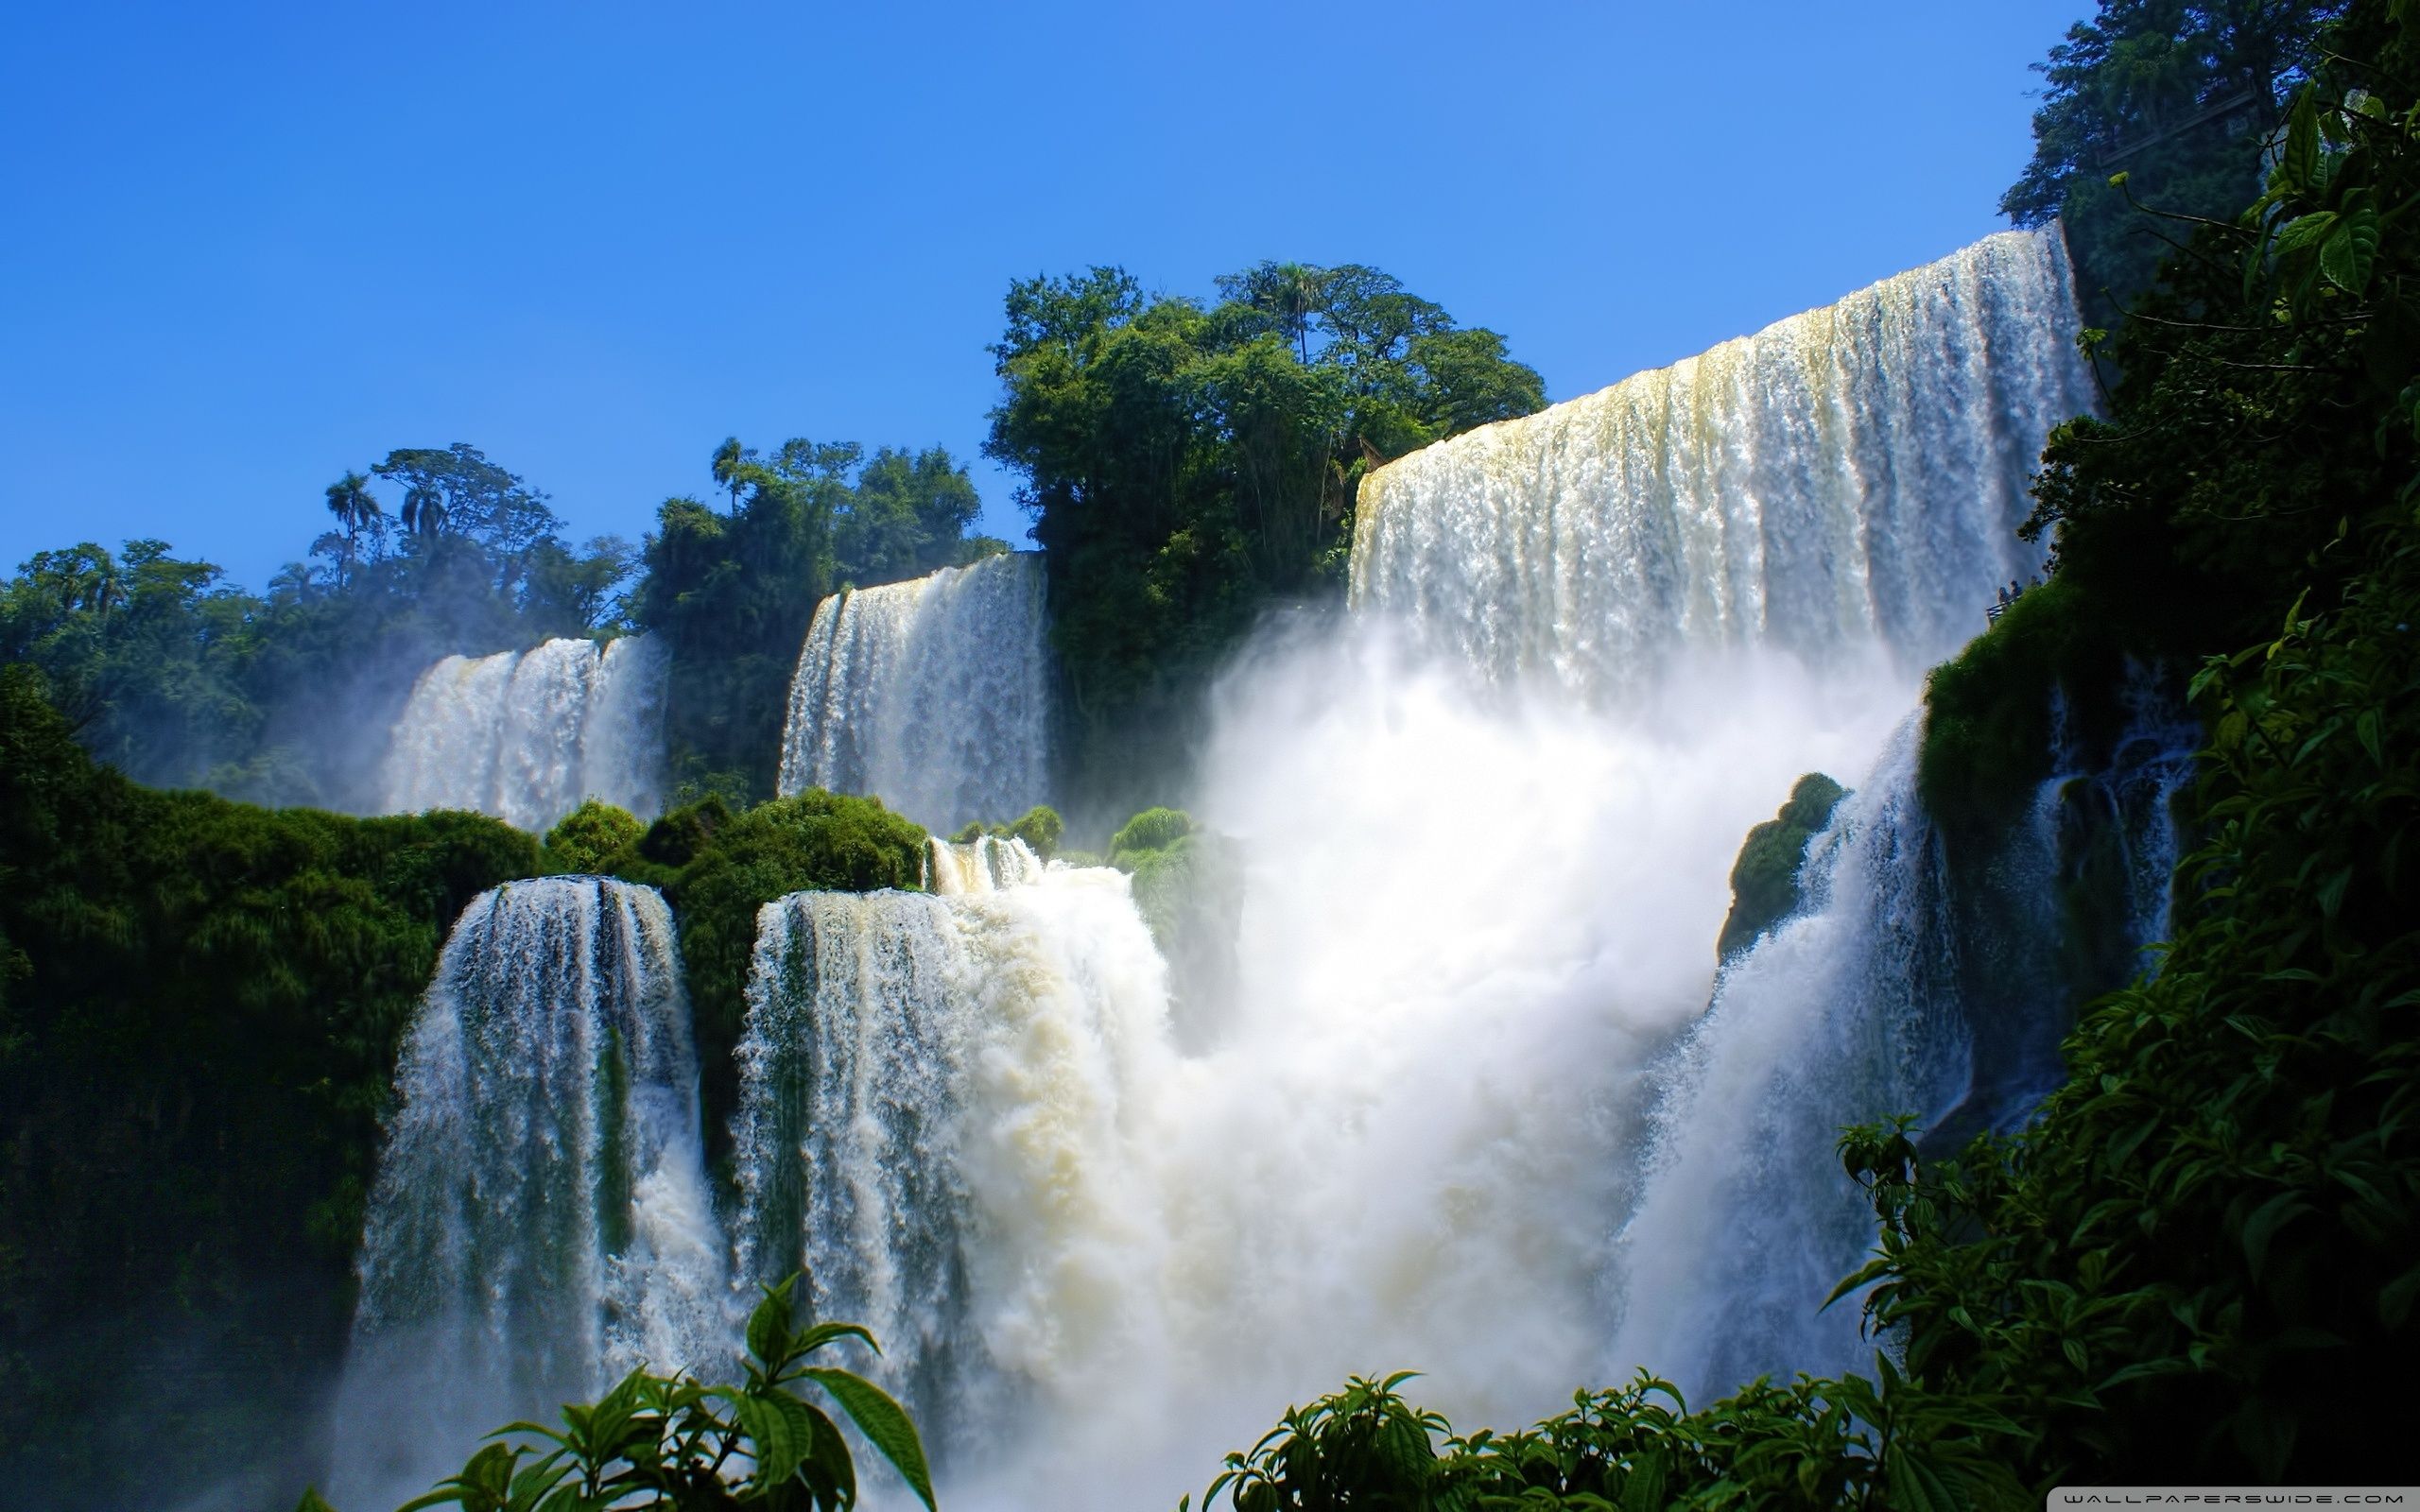 World's Most Amazing Waterfalls Ultra HD Desktop Background Wallpaper for 4K UHD TV, Tablet